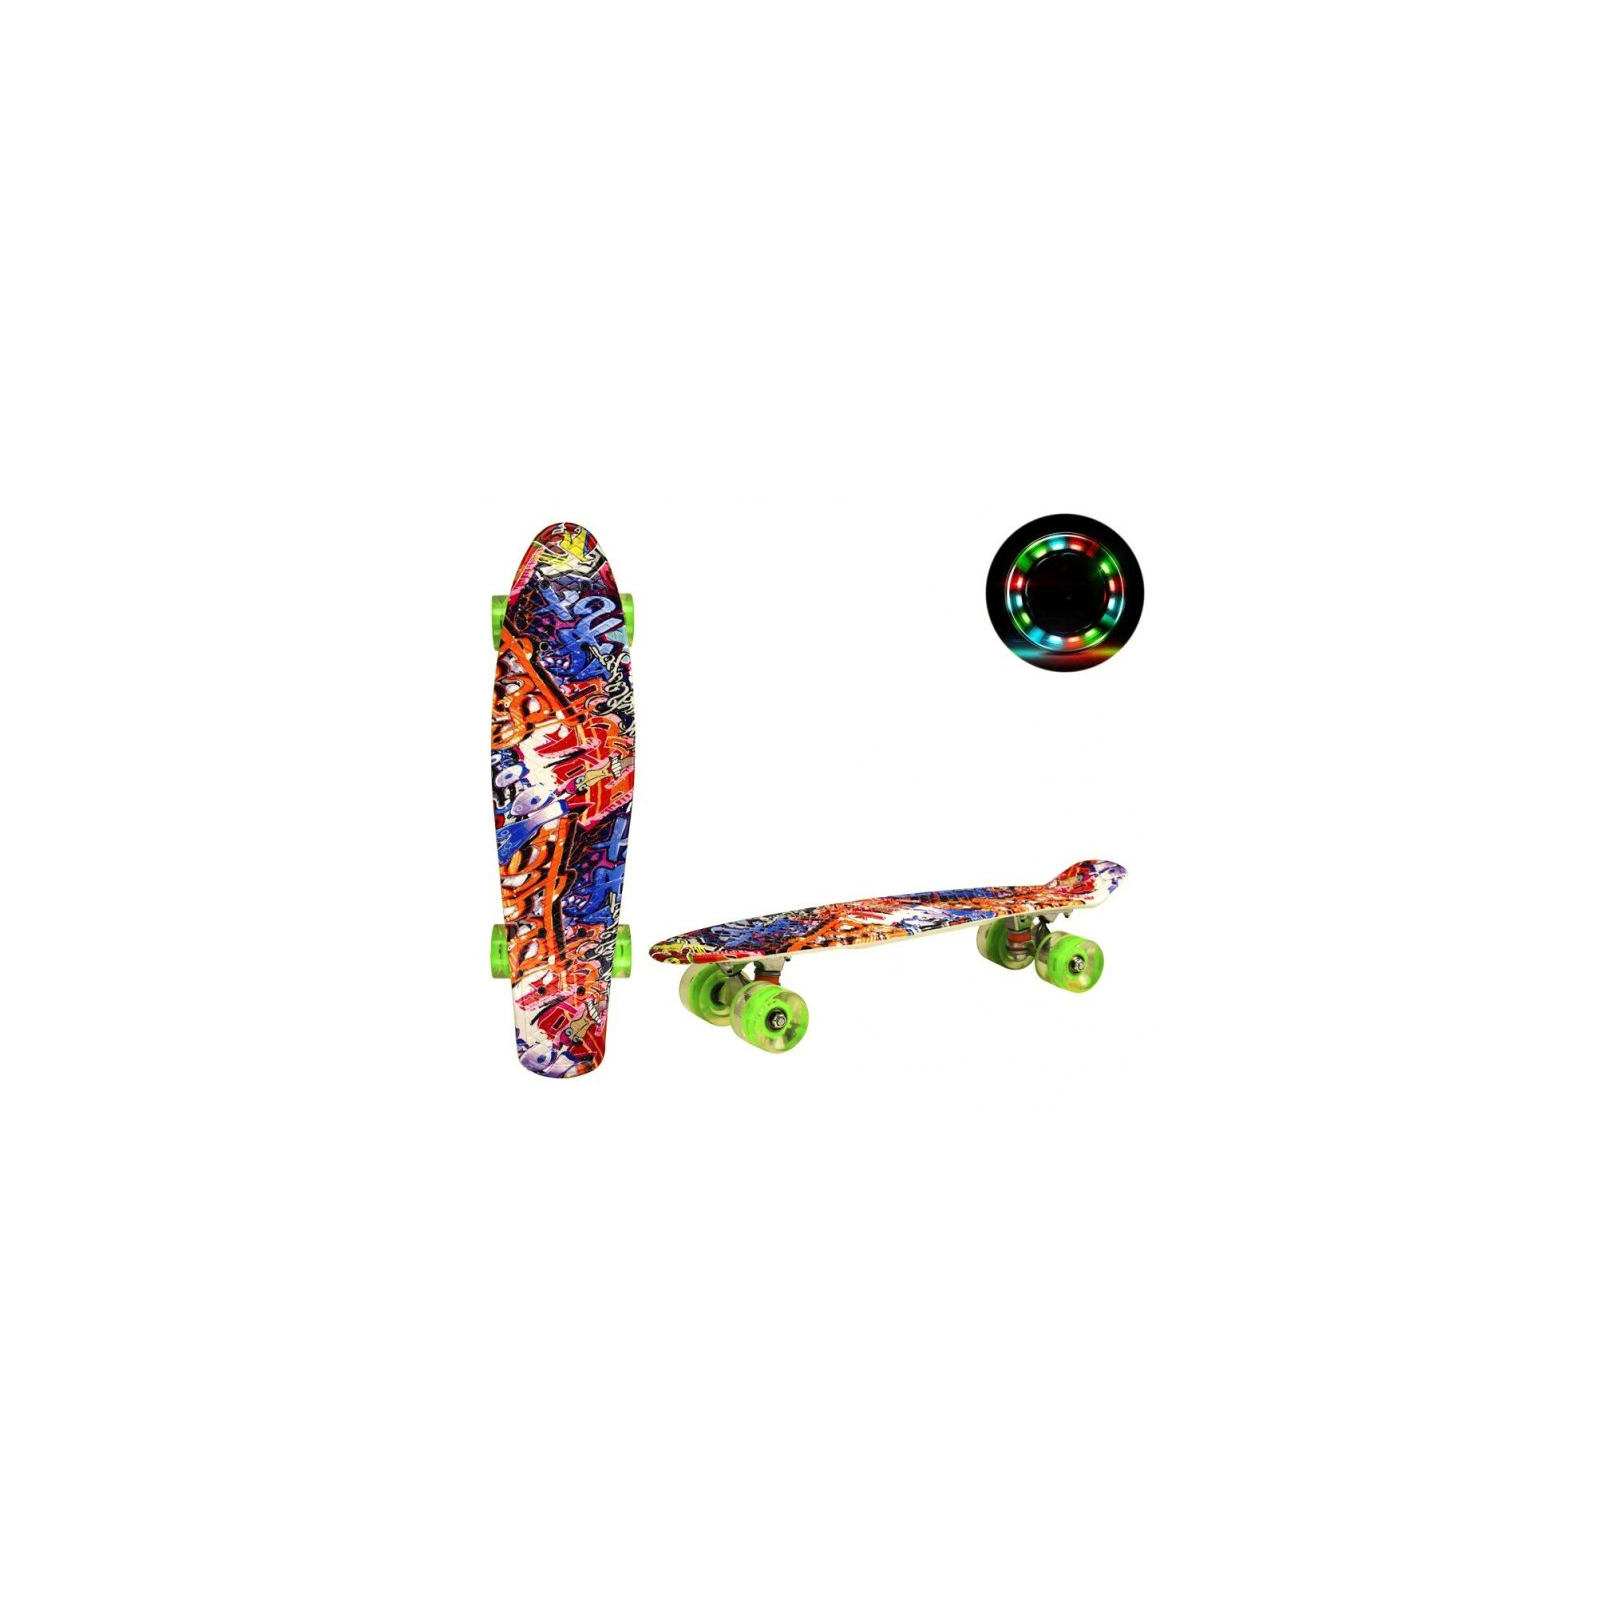 Скейтборд детский A-Toys Mix color, PU, LED, 56*15 cm (SC20503)